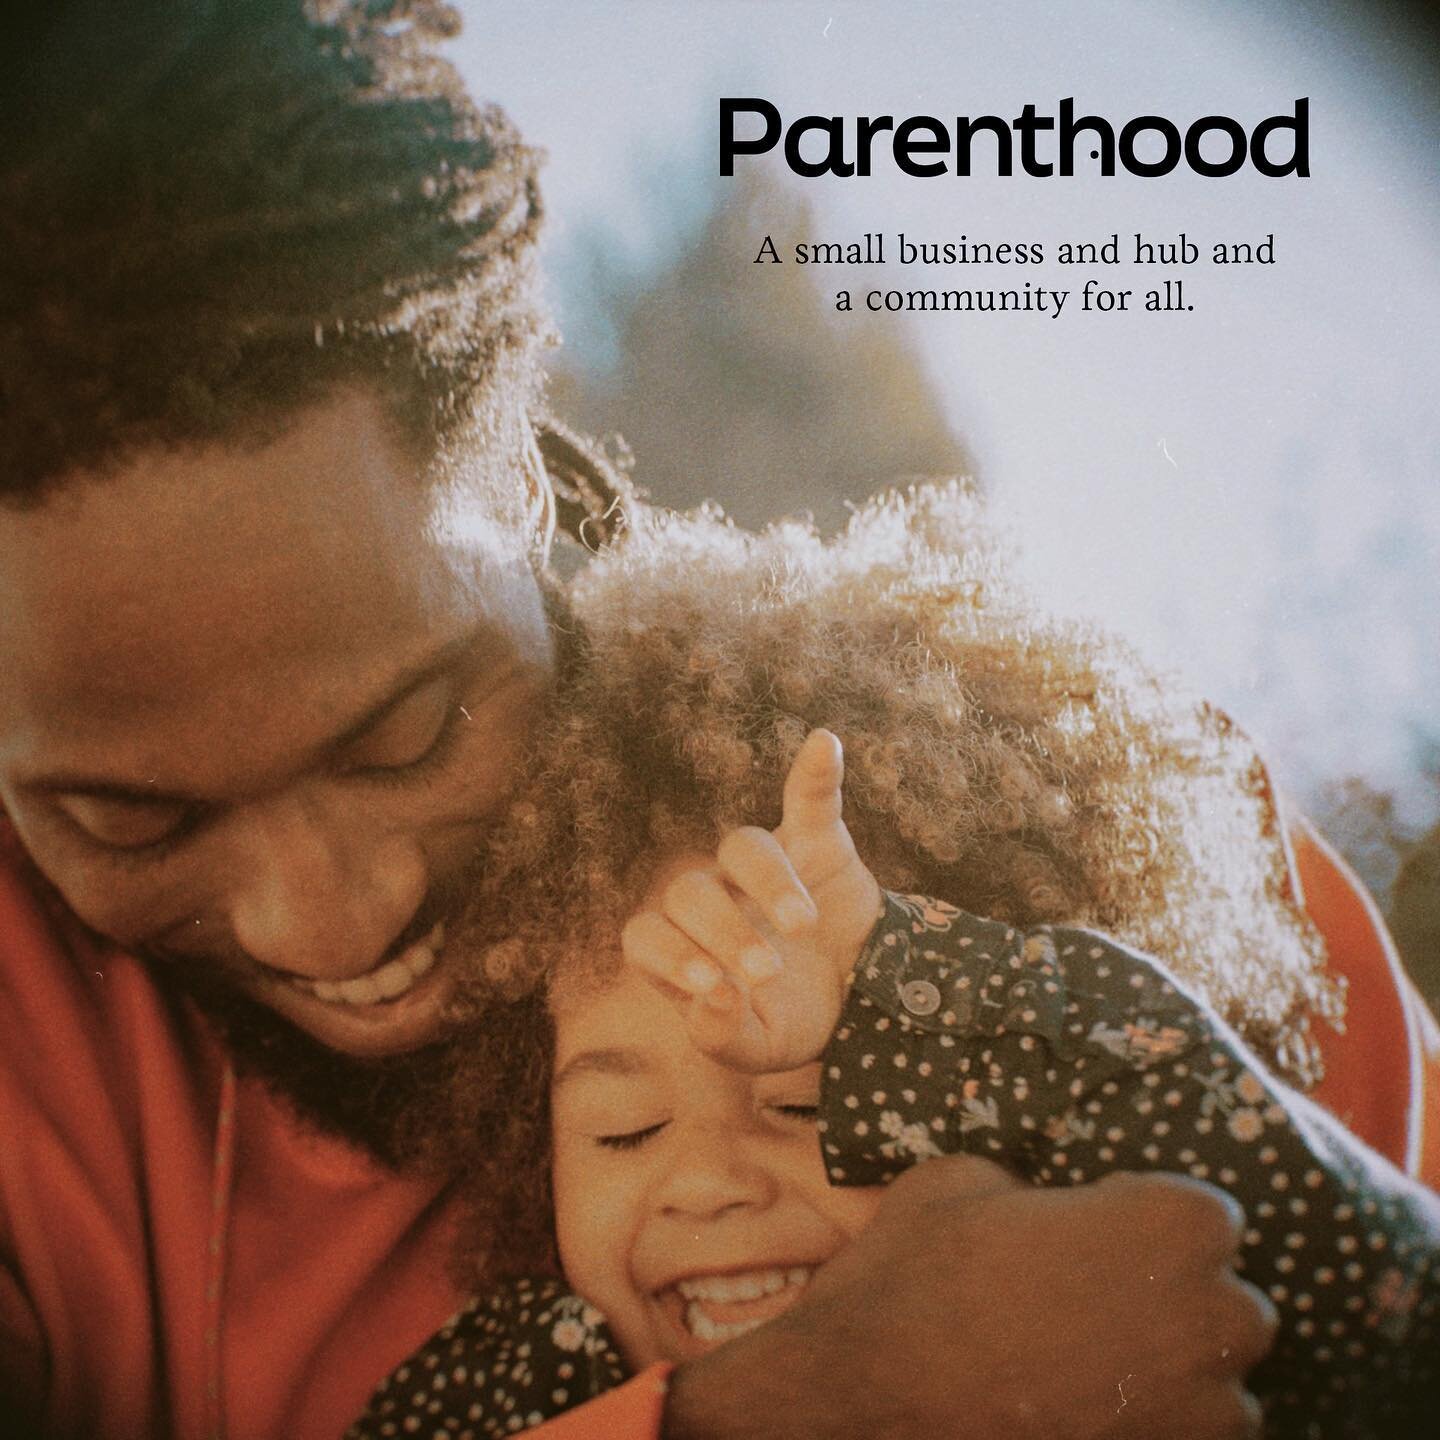 @hellotayloramy  Parenthood - community for parents #thebriefbabes #parenthood #branding #brandidentity